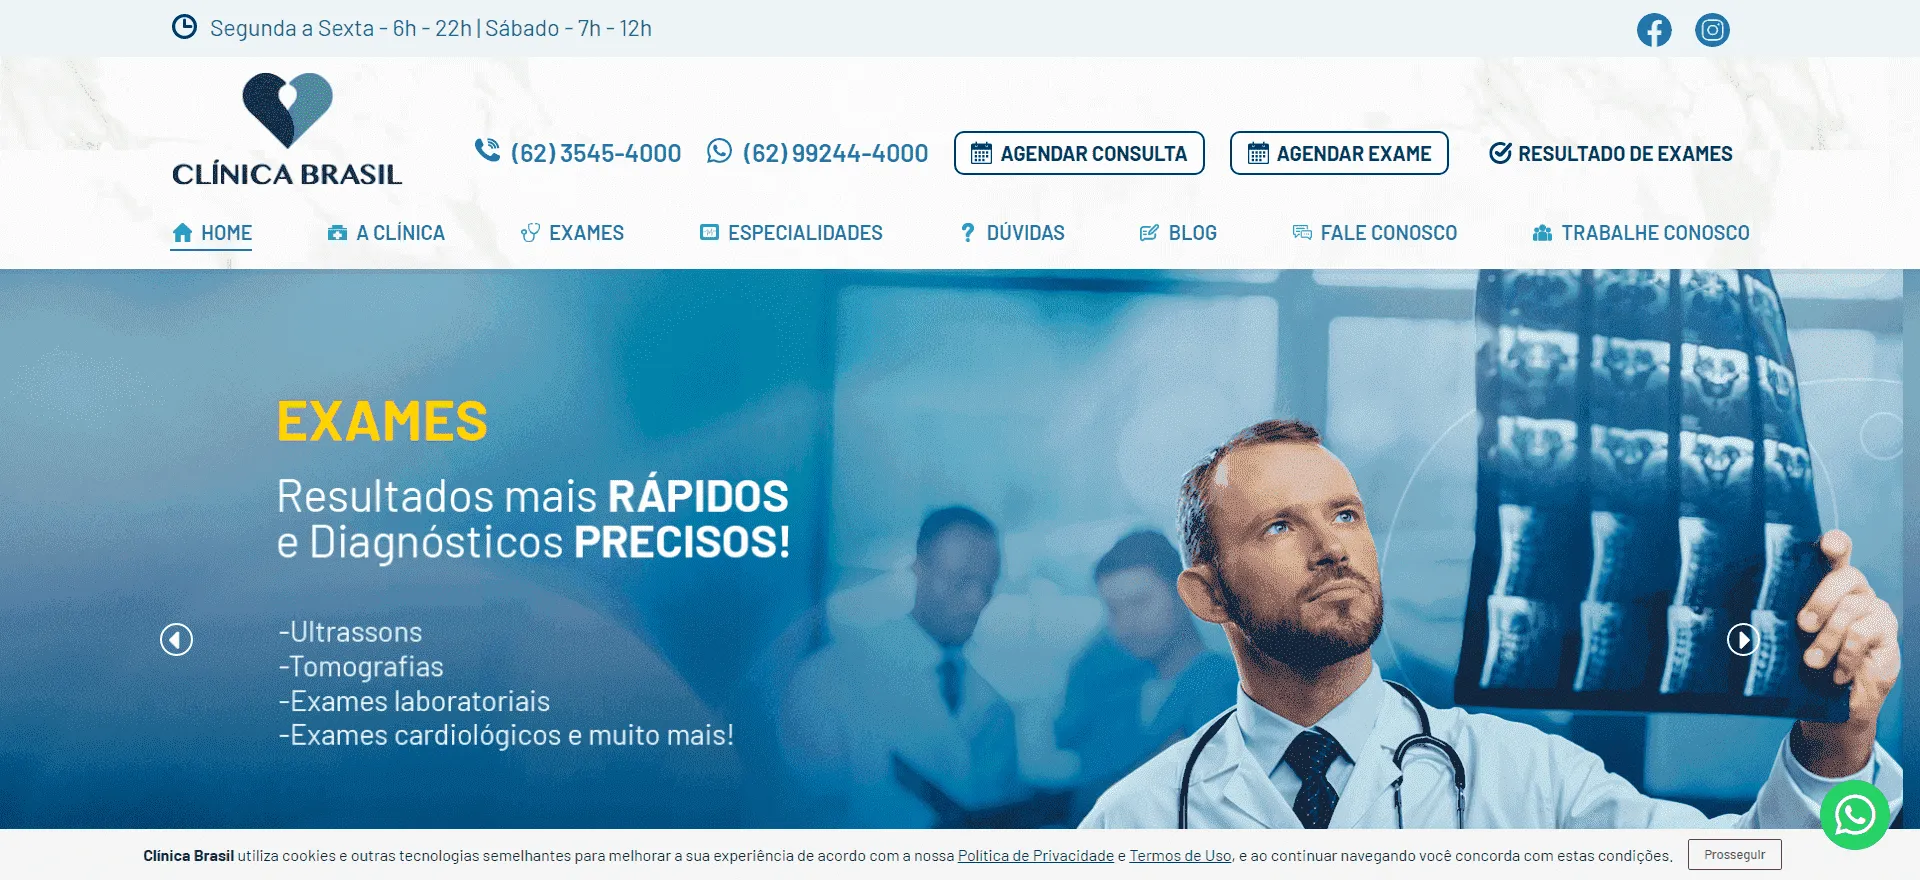 raddar-case-website-clinica-brasil